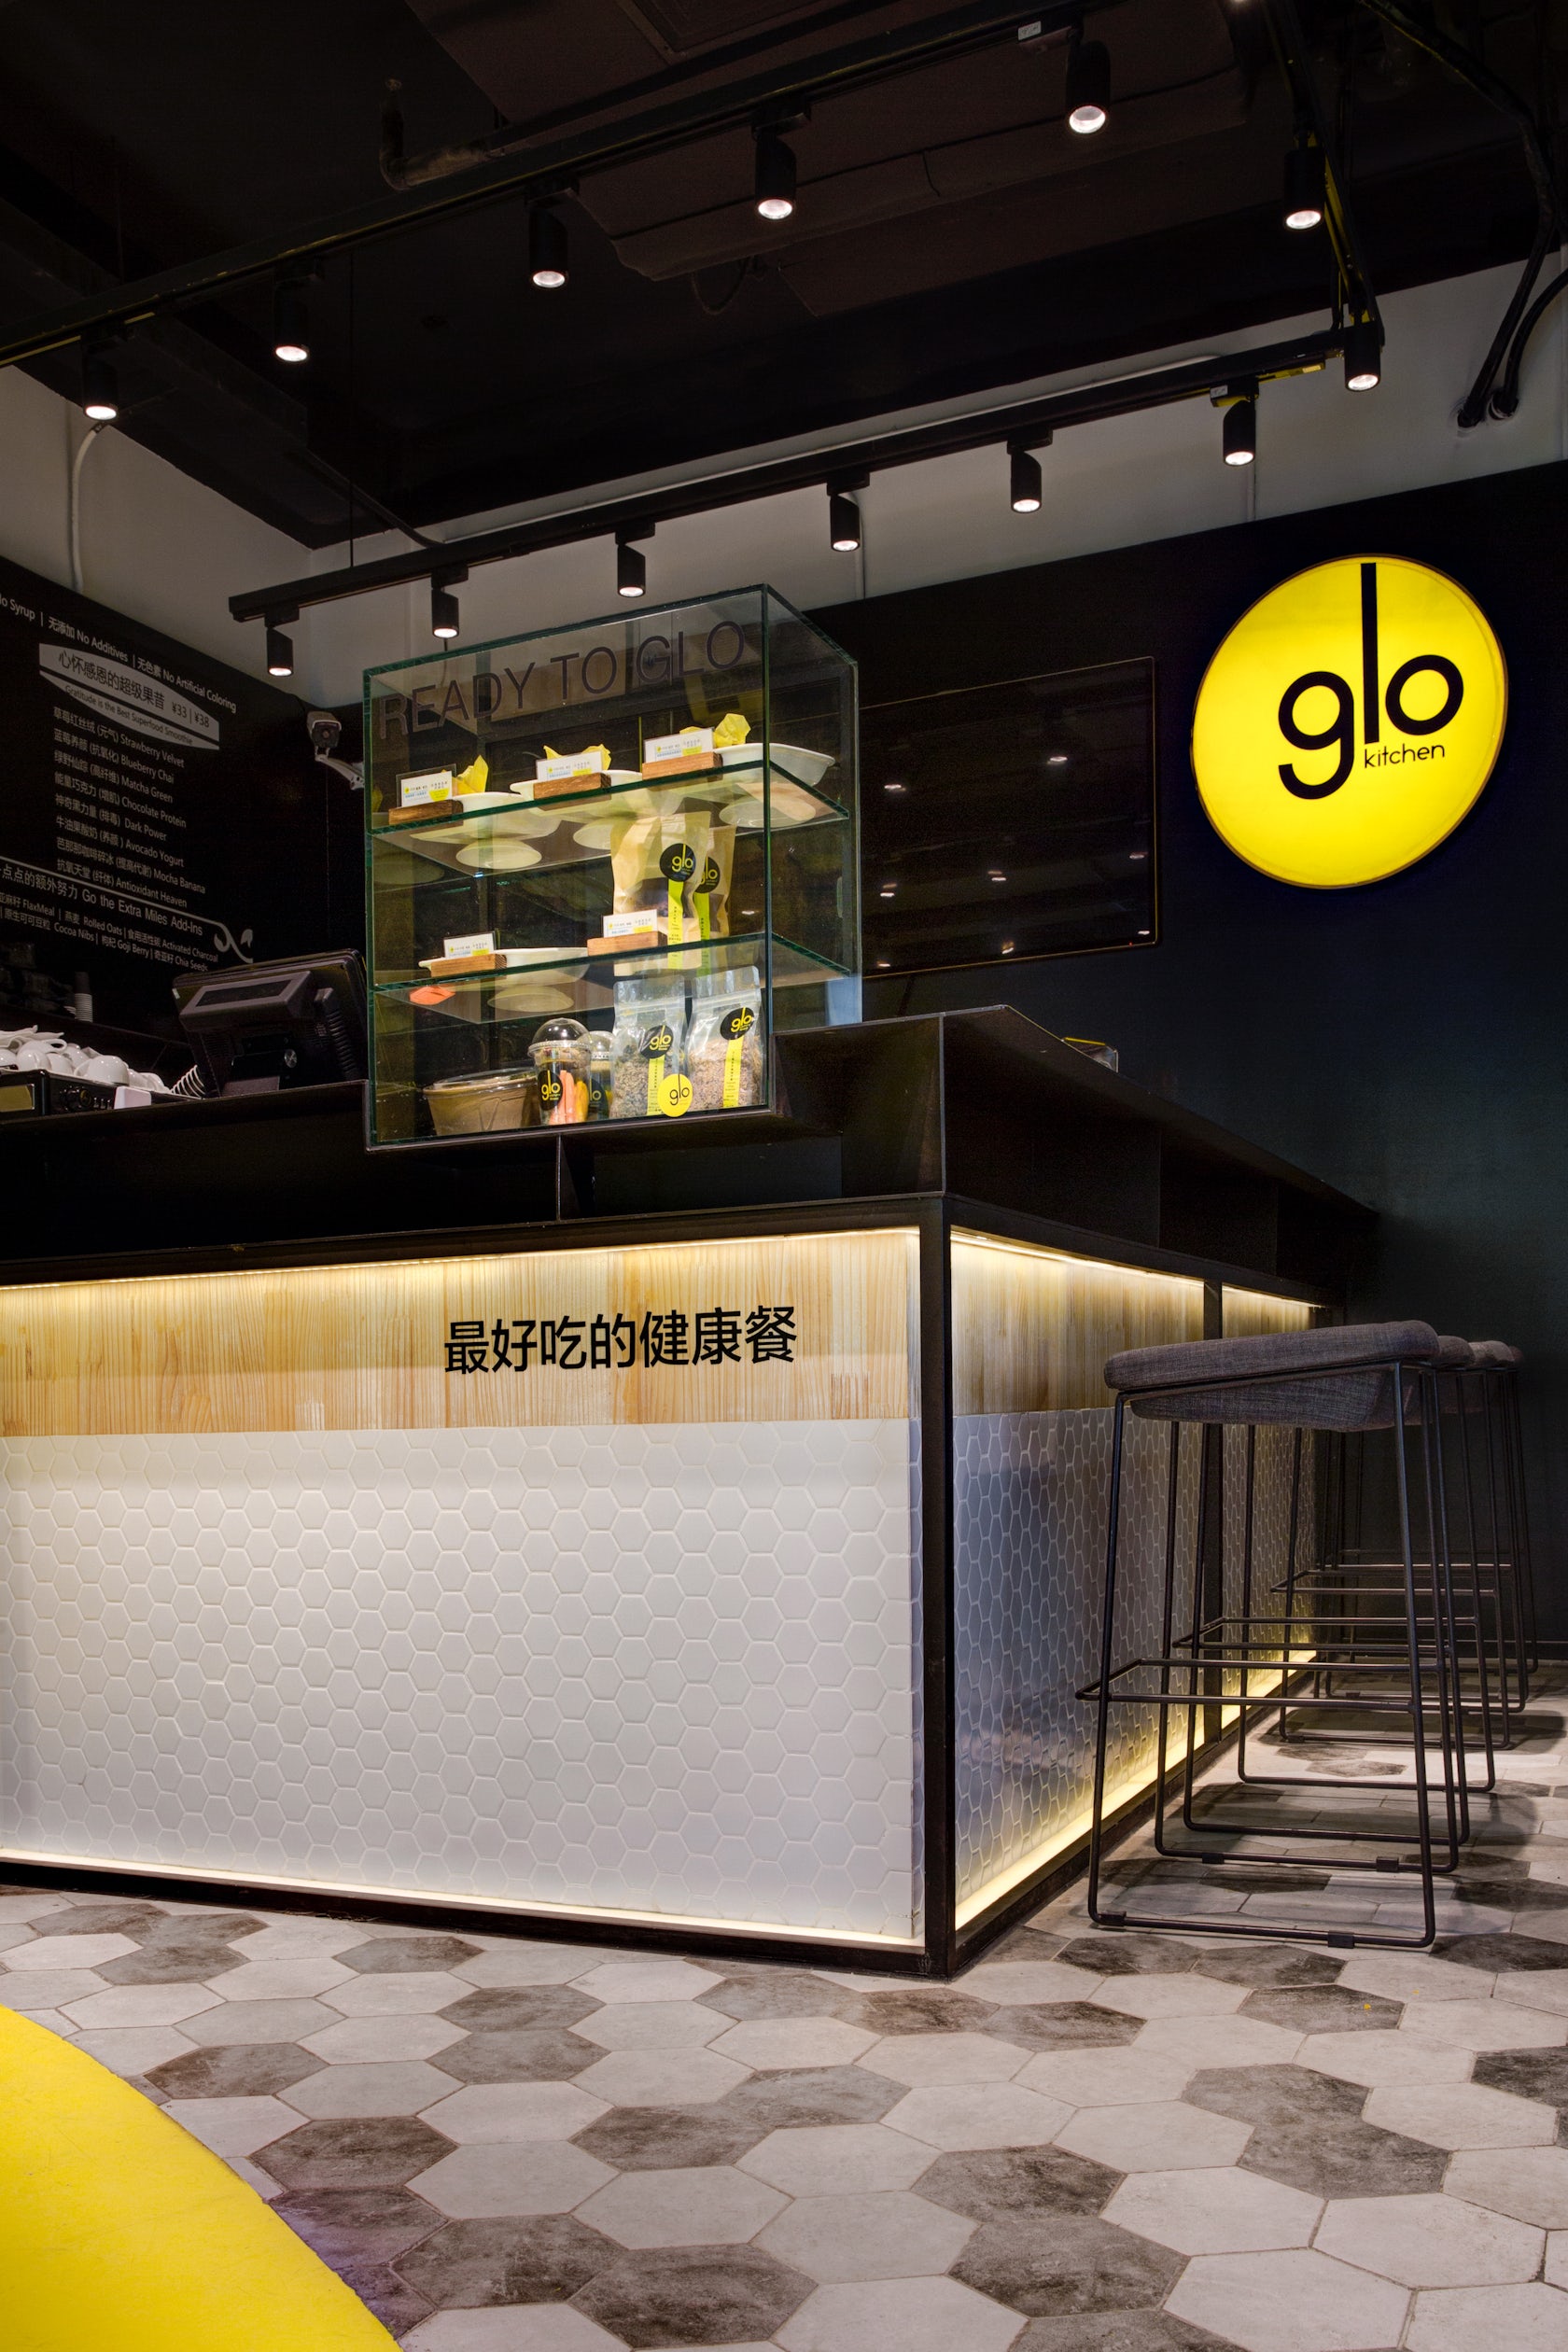 GLO Kitchen Beijing by Plusout Design Studio - Architizer